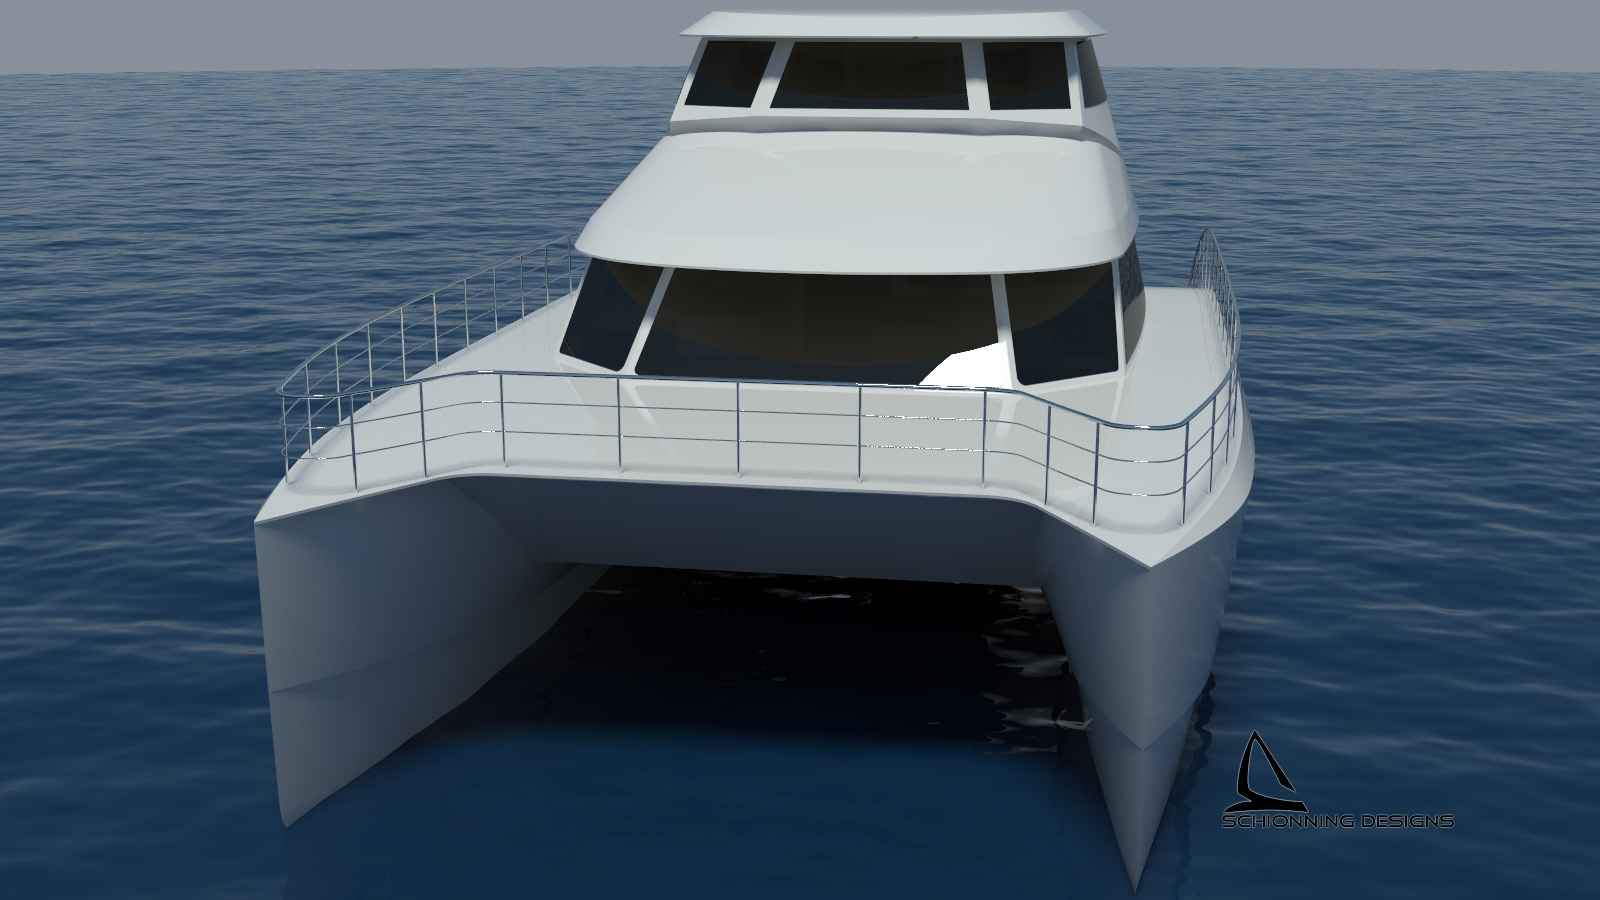 Schionning Designs Prowler 1500 Power Catamaran - Exterior CAD Render 07